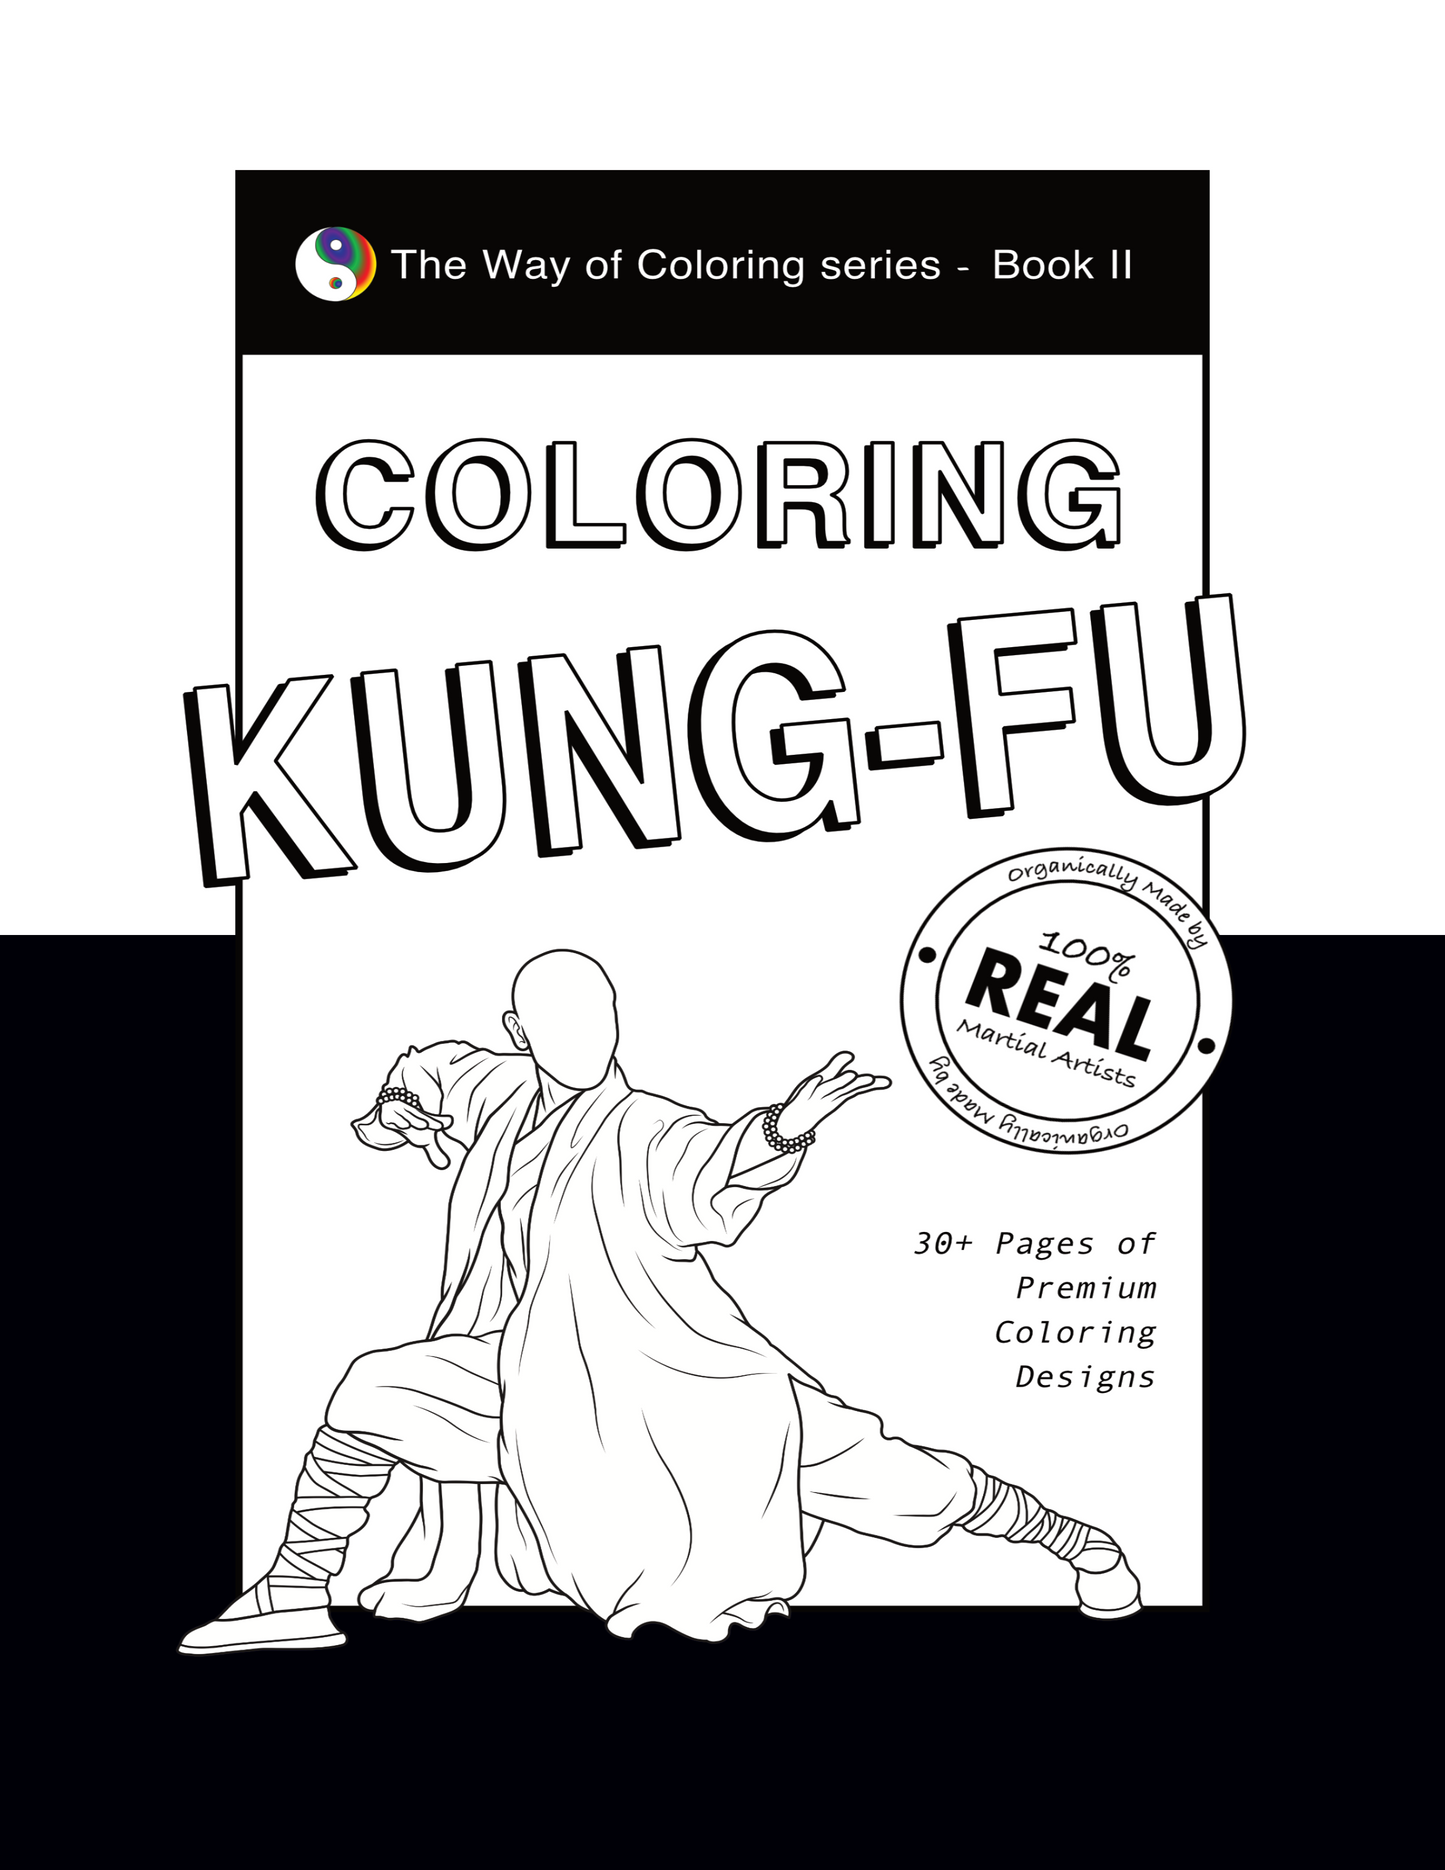 "Coloring Kung-fu" Coloring Book